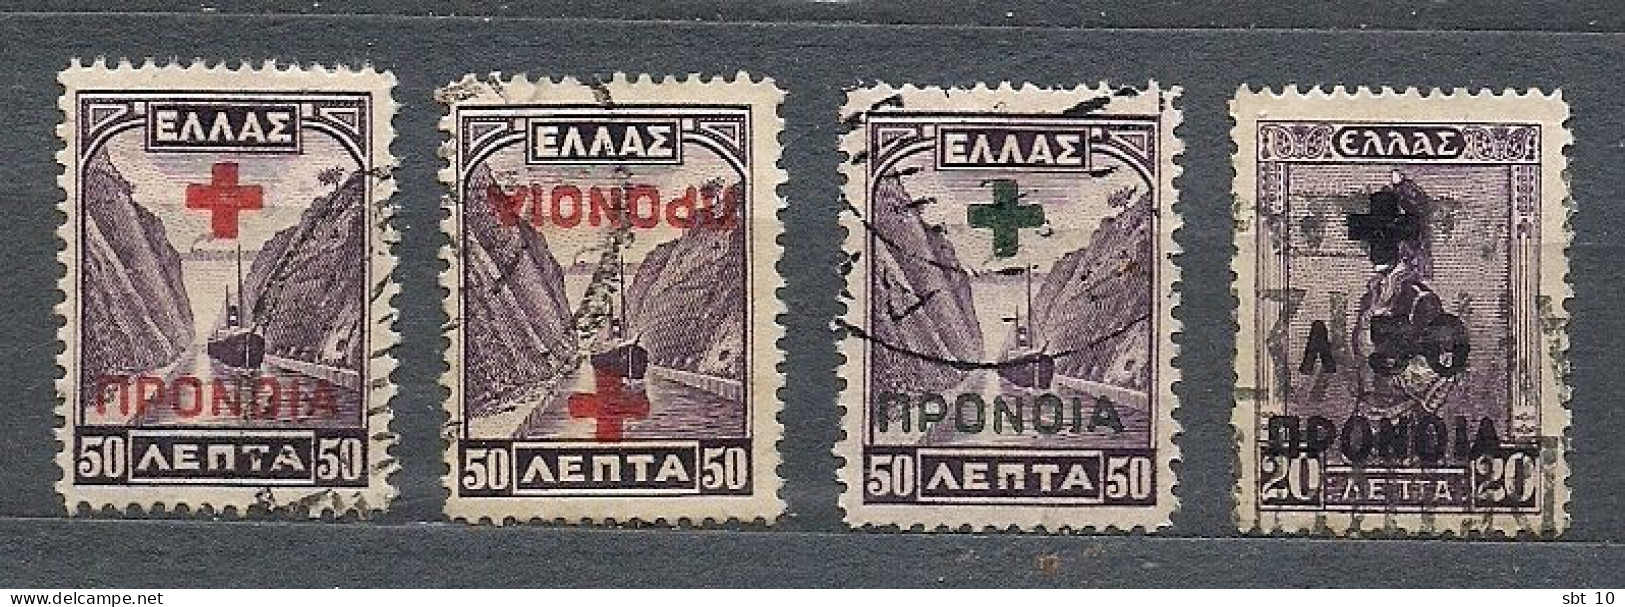 Greece 1937/38 - Social Welfare Fund Overprints - Set Used - Beneficenza